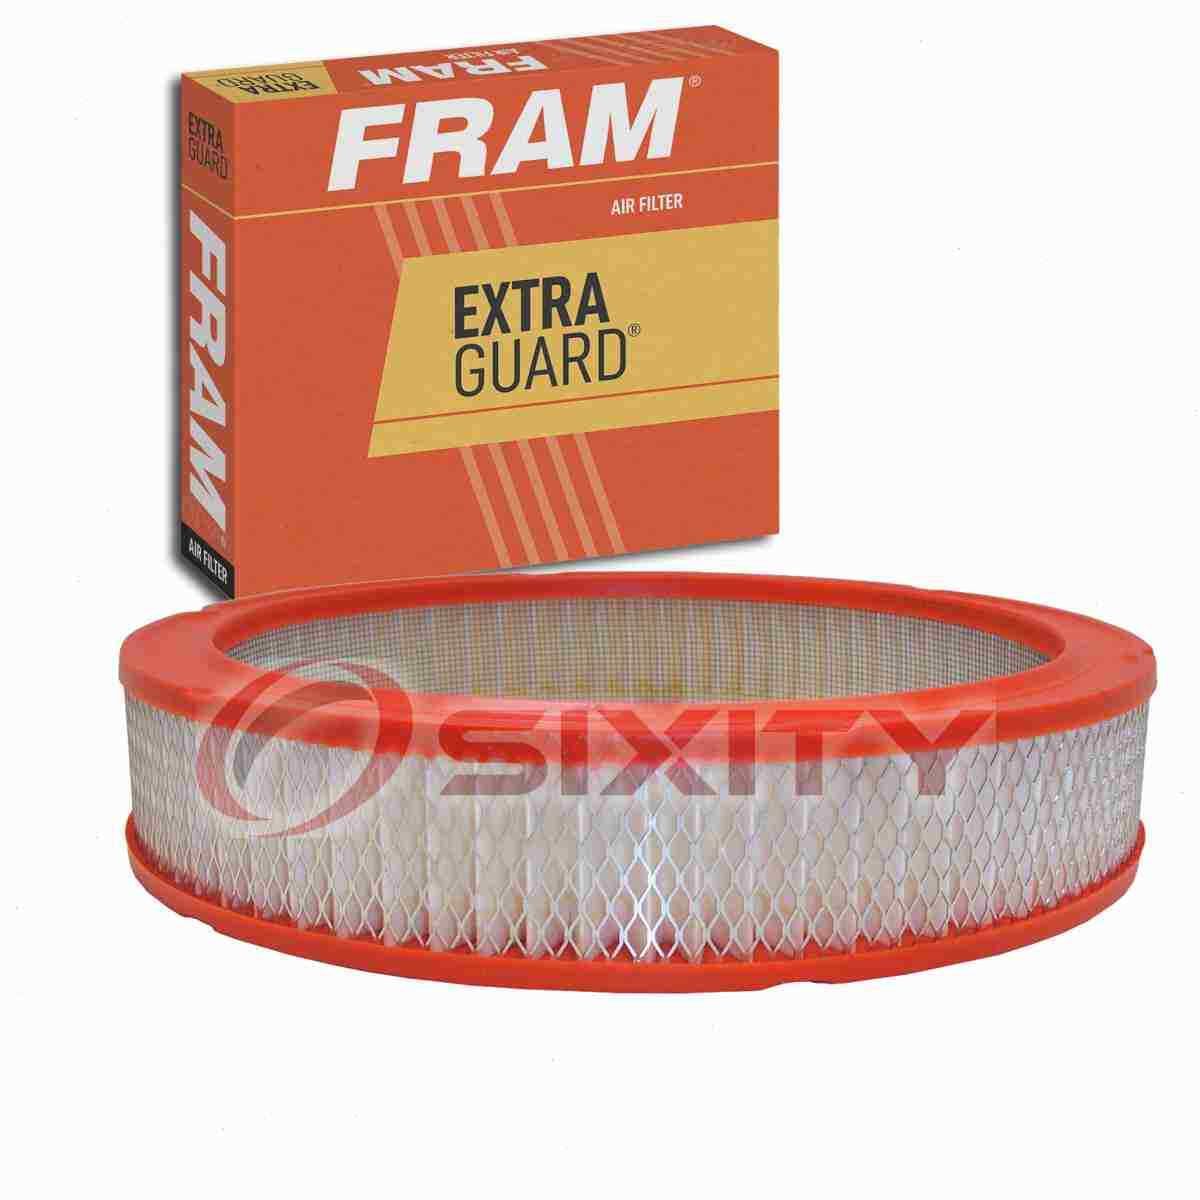 FRAM Extra Guard Air Filter for 1968-1969 Chevrolet Biscayne Intake Inlet dk